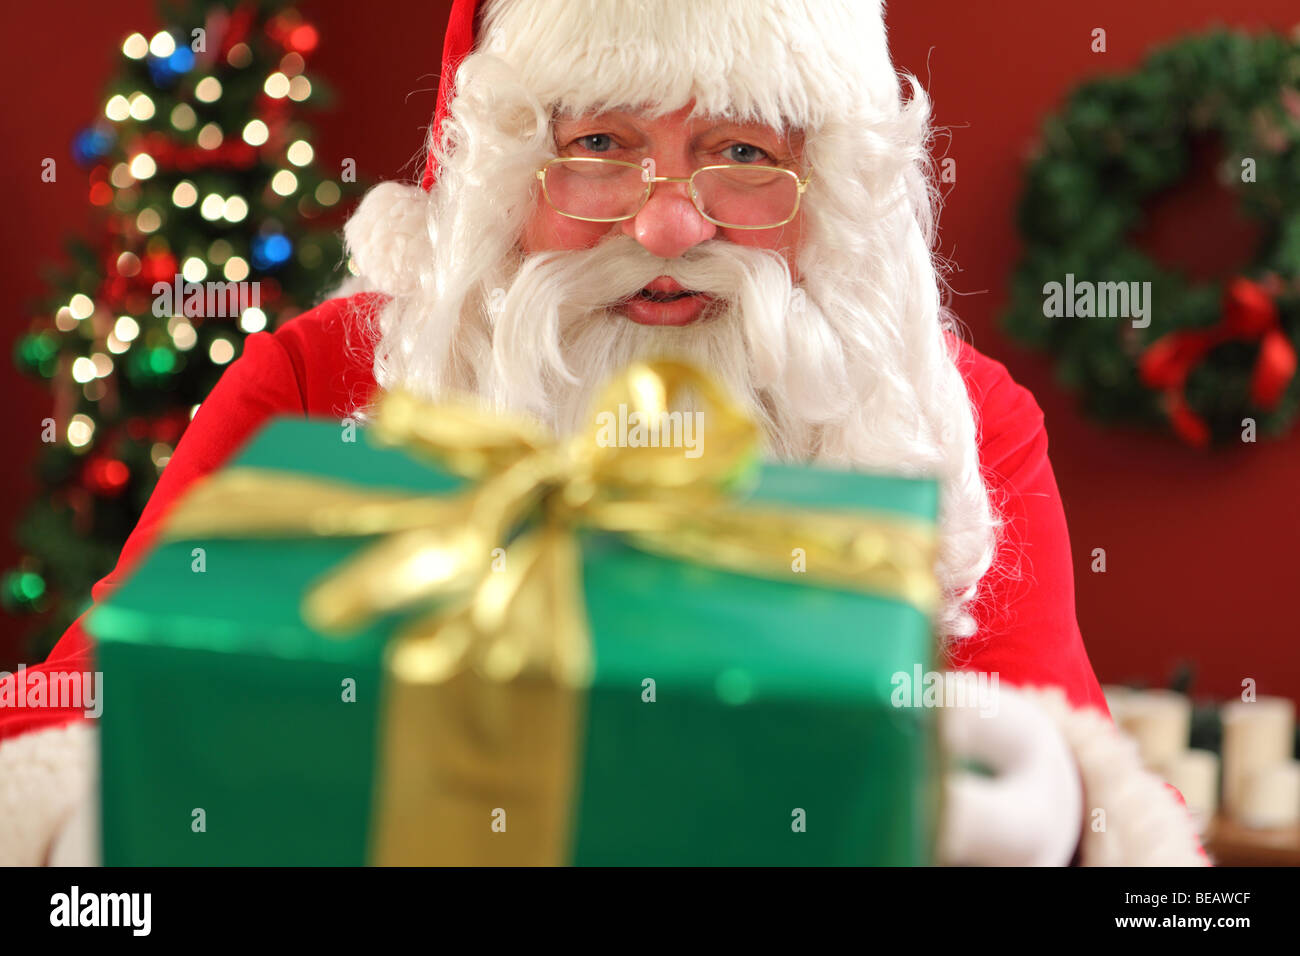 Santa Claus giving gift Stock Photo